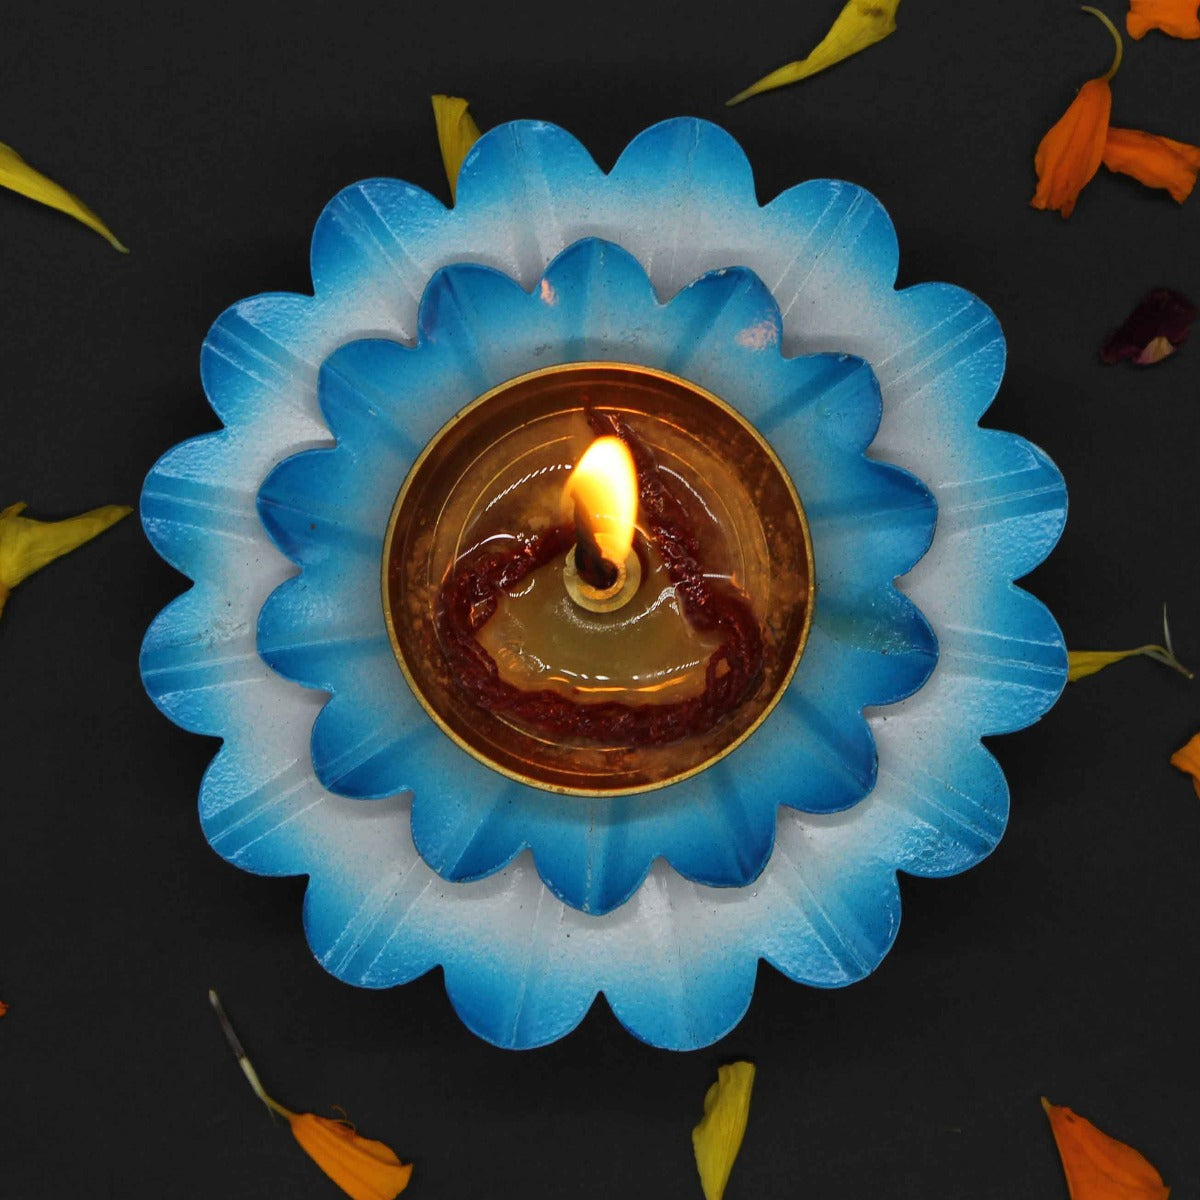 Blue Diya For Home/Temple/Pooja Decoration (4 inch)